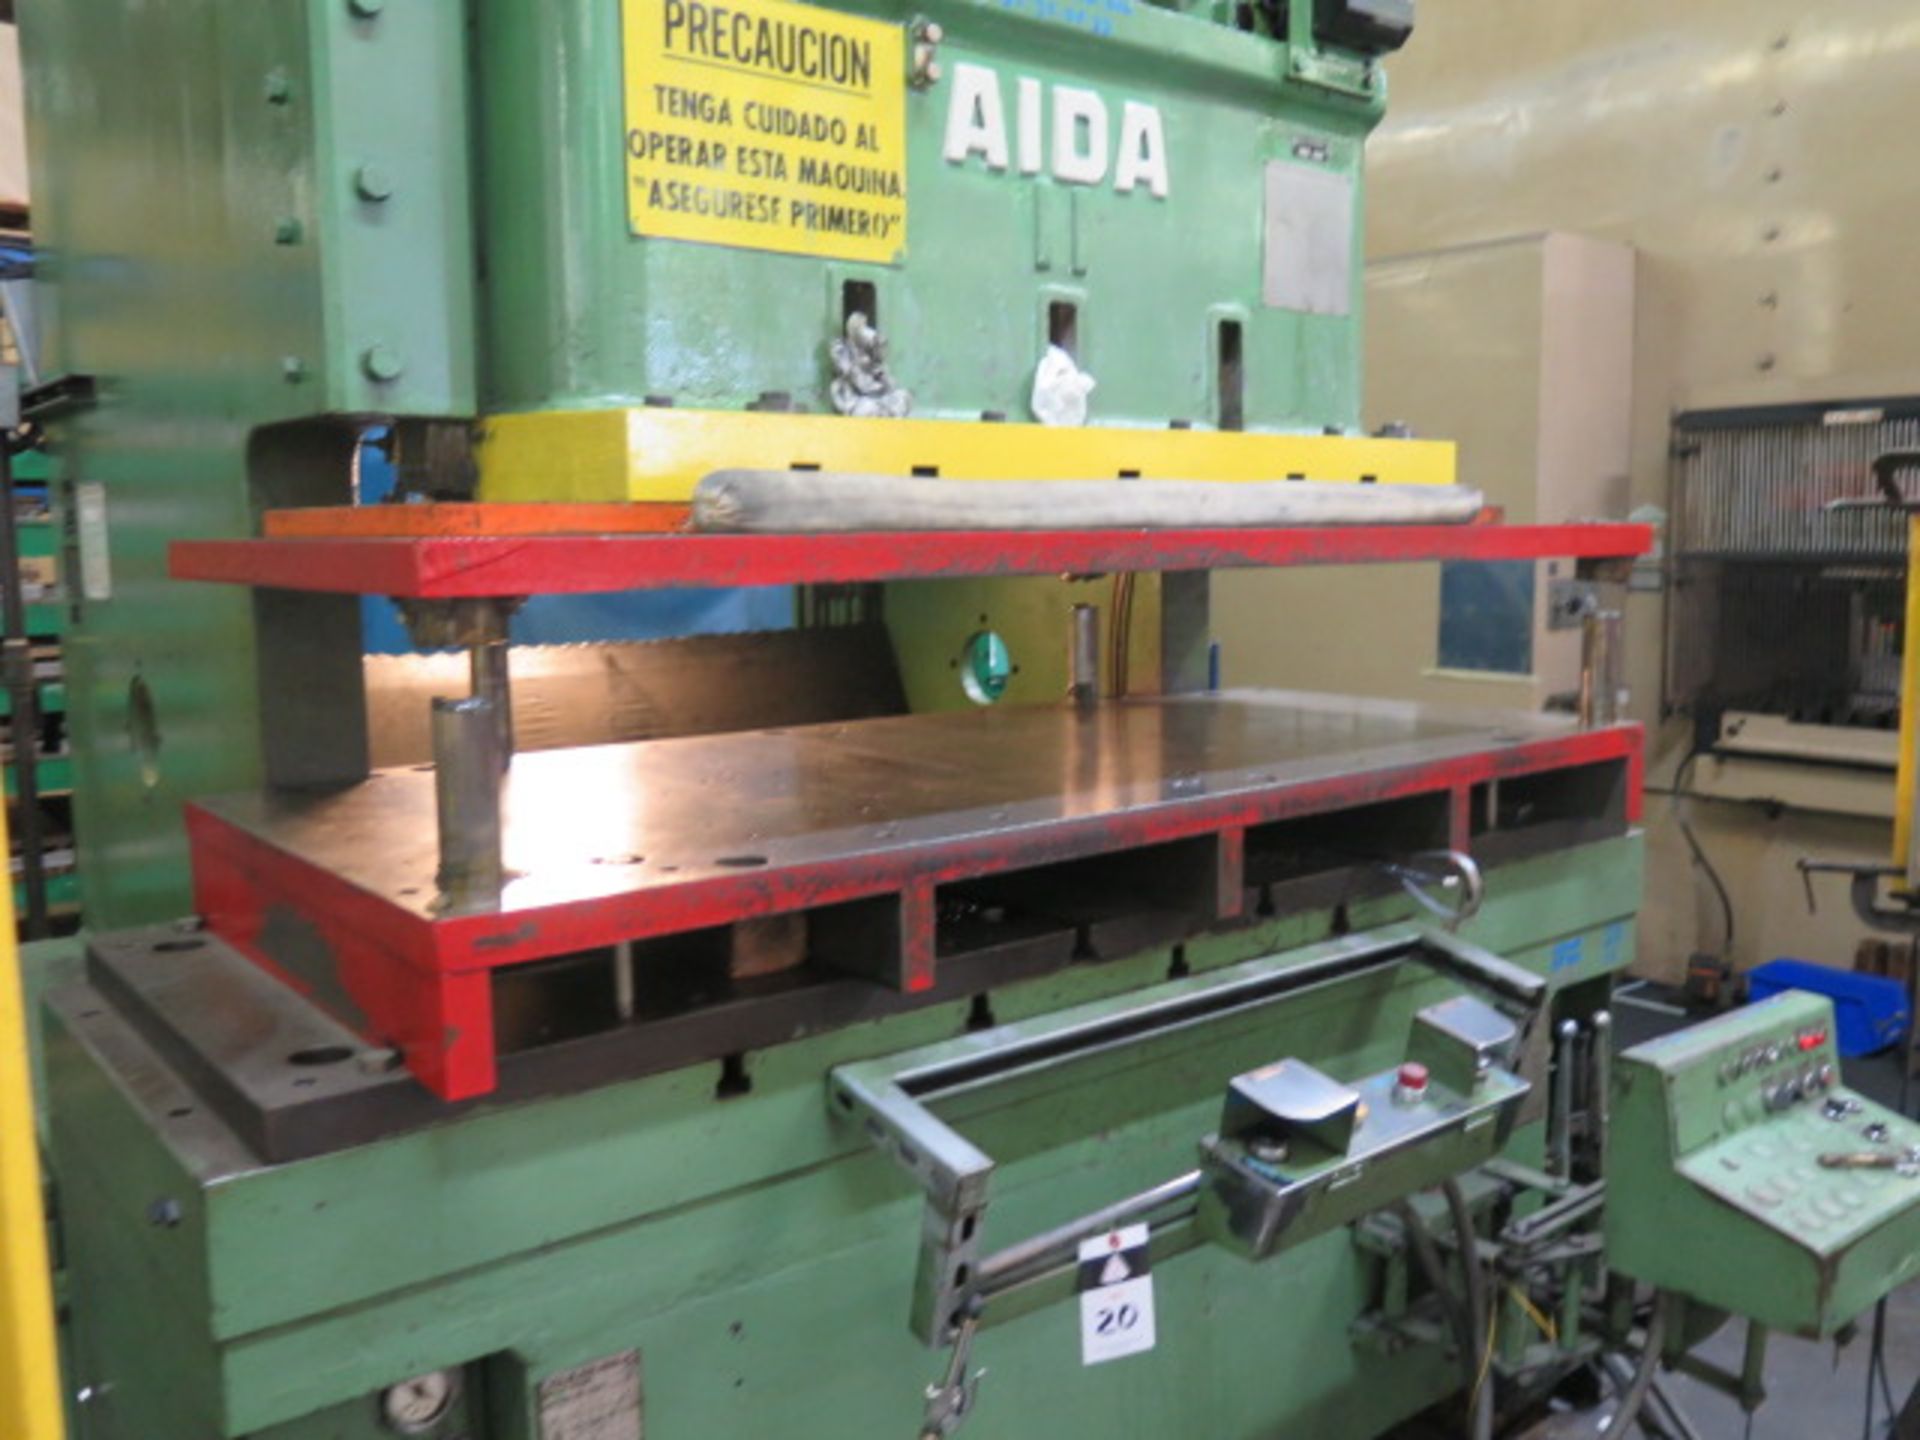 Aida C2-11(2) 110 Ton Hydfraulic Gap Frame Stamping Press s/n 10511-0454 w/Aida Controls, SOLD AS IS - Image 5 of 18